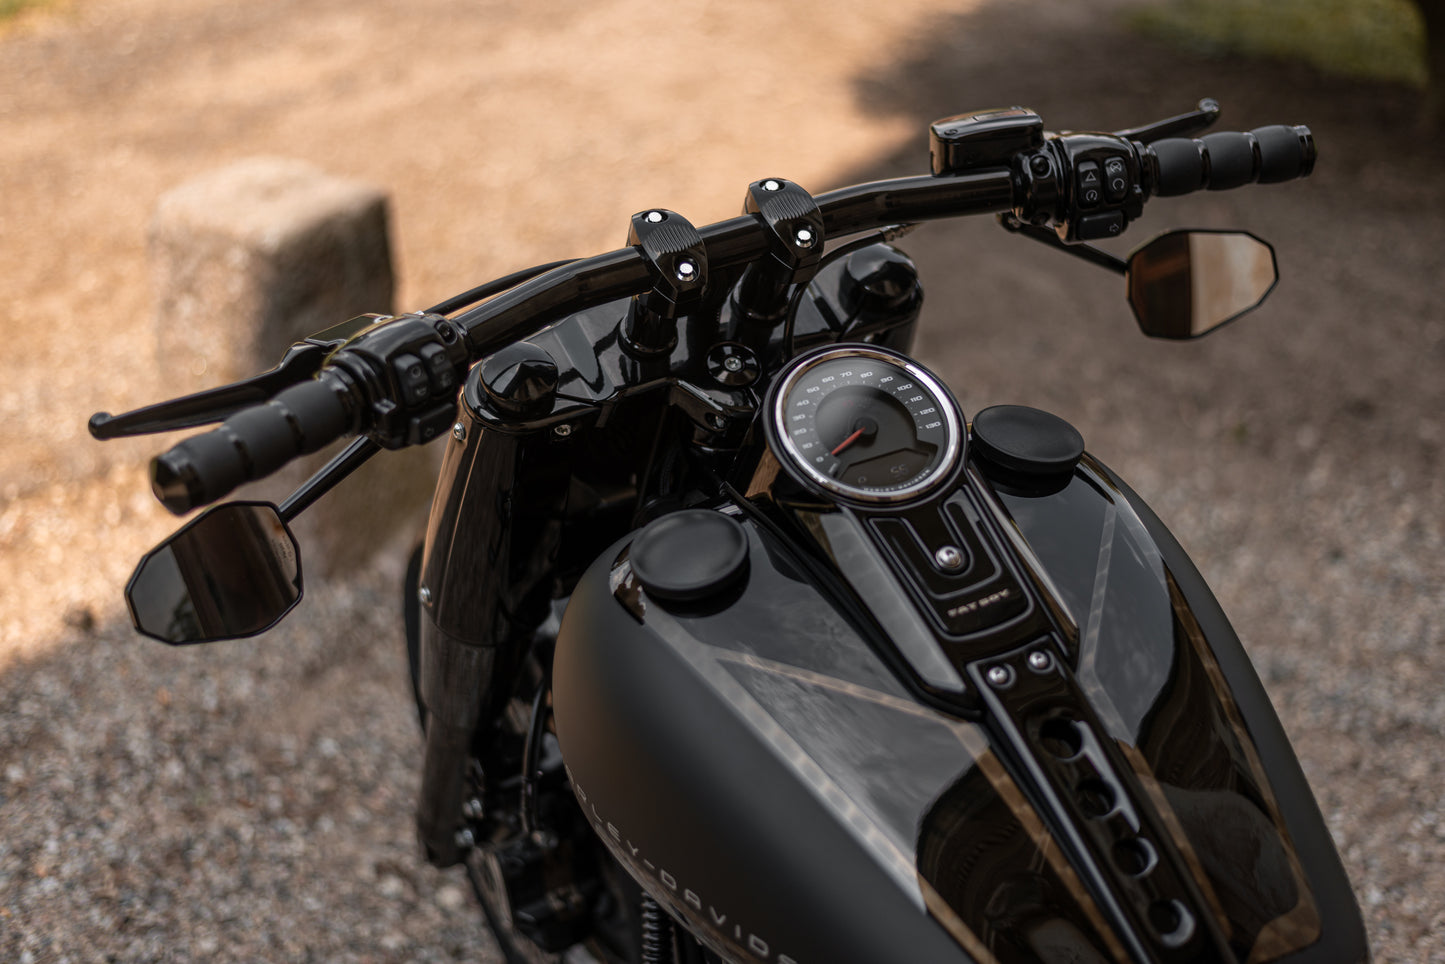 Zoomed Harley Davidson motorcycle with Killer Custom  "Avenger" fat drag handlebar from above blurry background